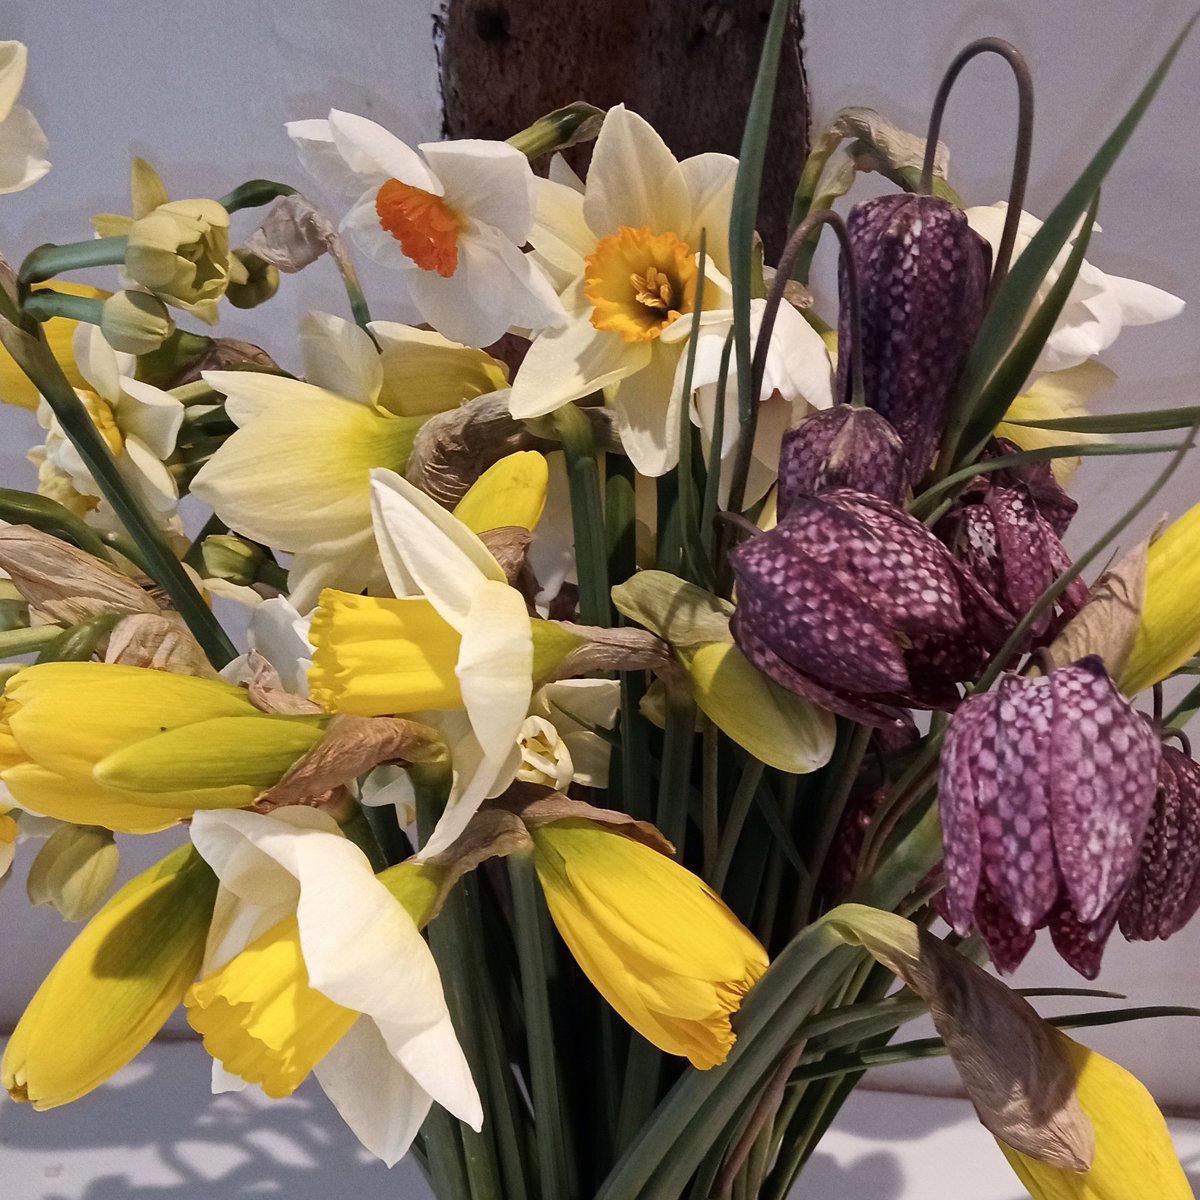 #FarmGrown #daffodils & #fritillaries at #WhiteColne village fair, #Essex, this Saturday morning. 

#grownnotflown #flowerfarm #workwithnature #ecofriendly #buylocal